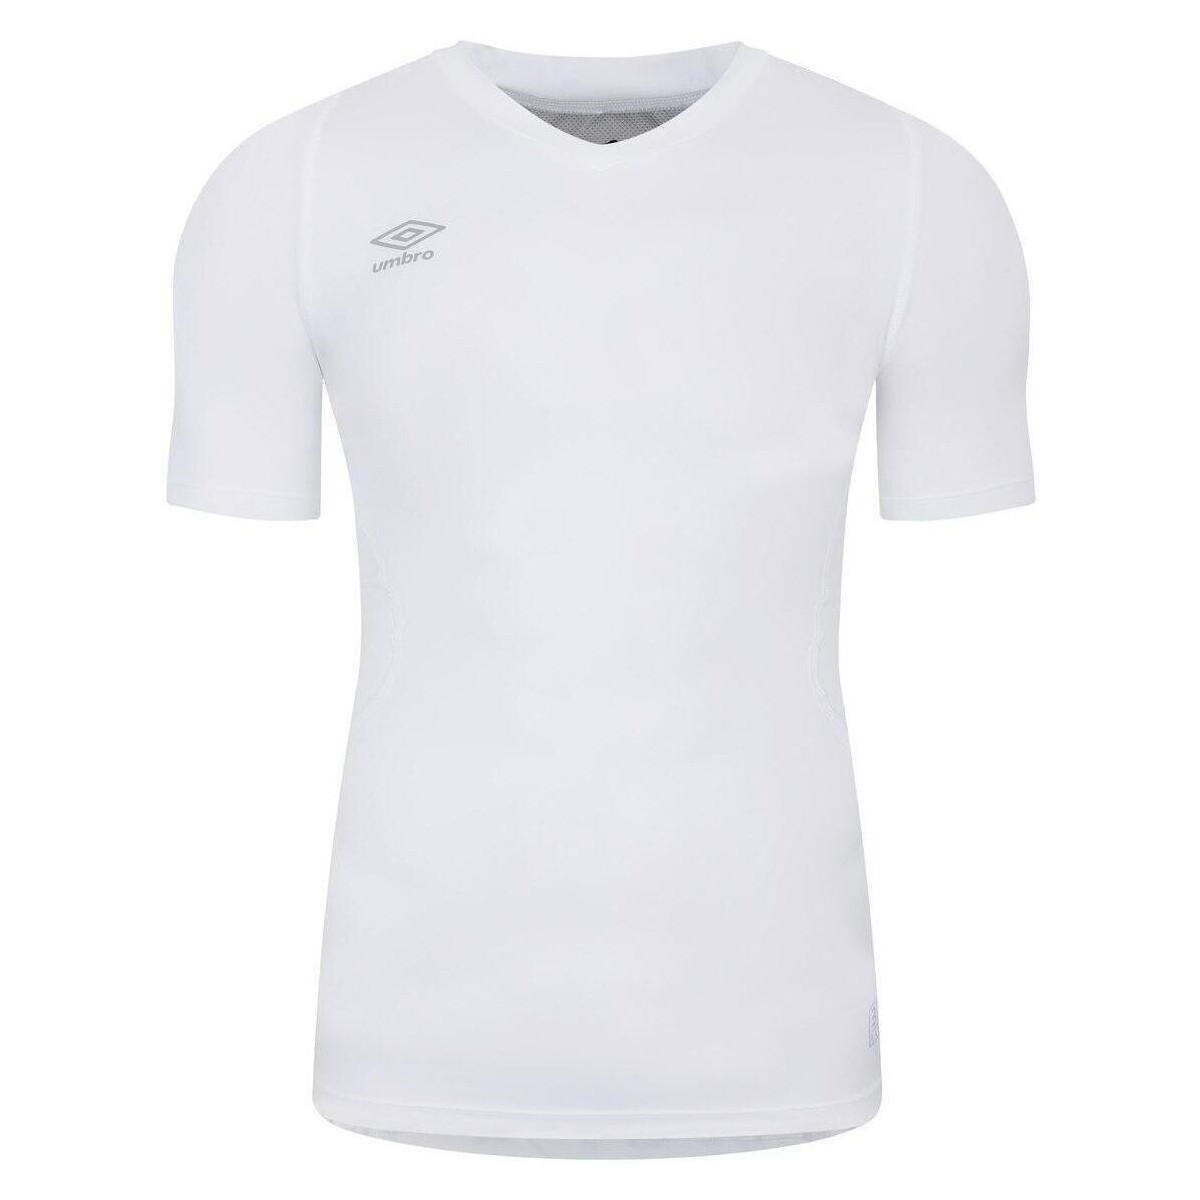 textil Camisetas manga larga Umbro Elite Blanco